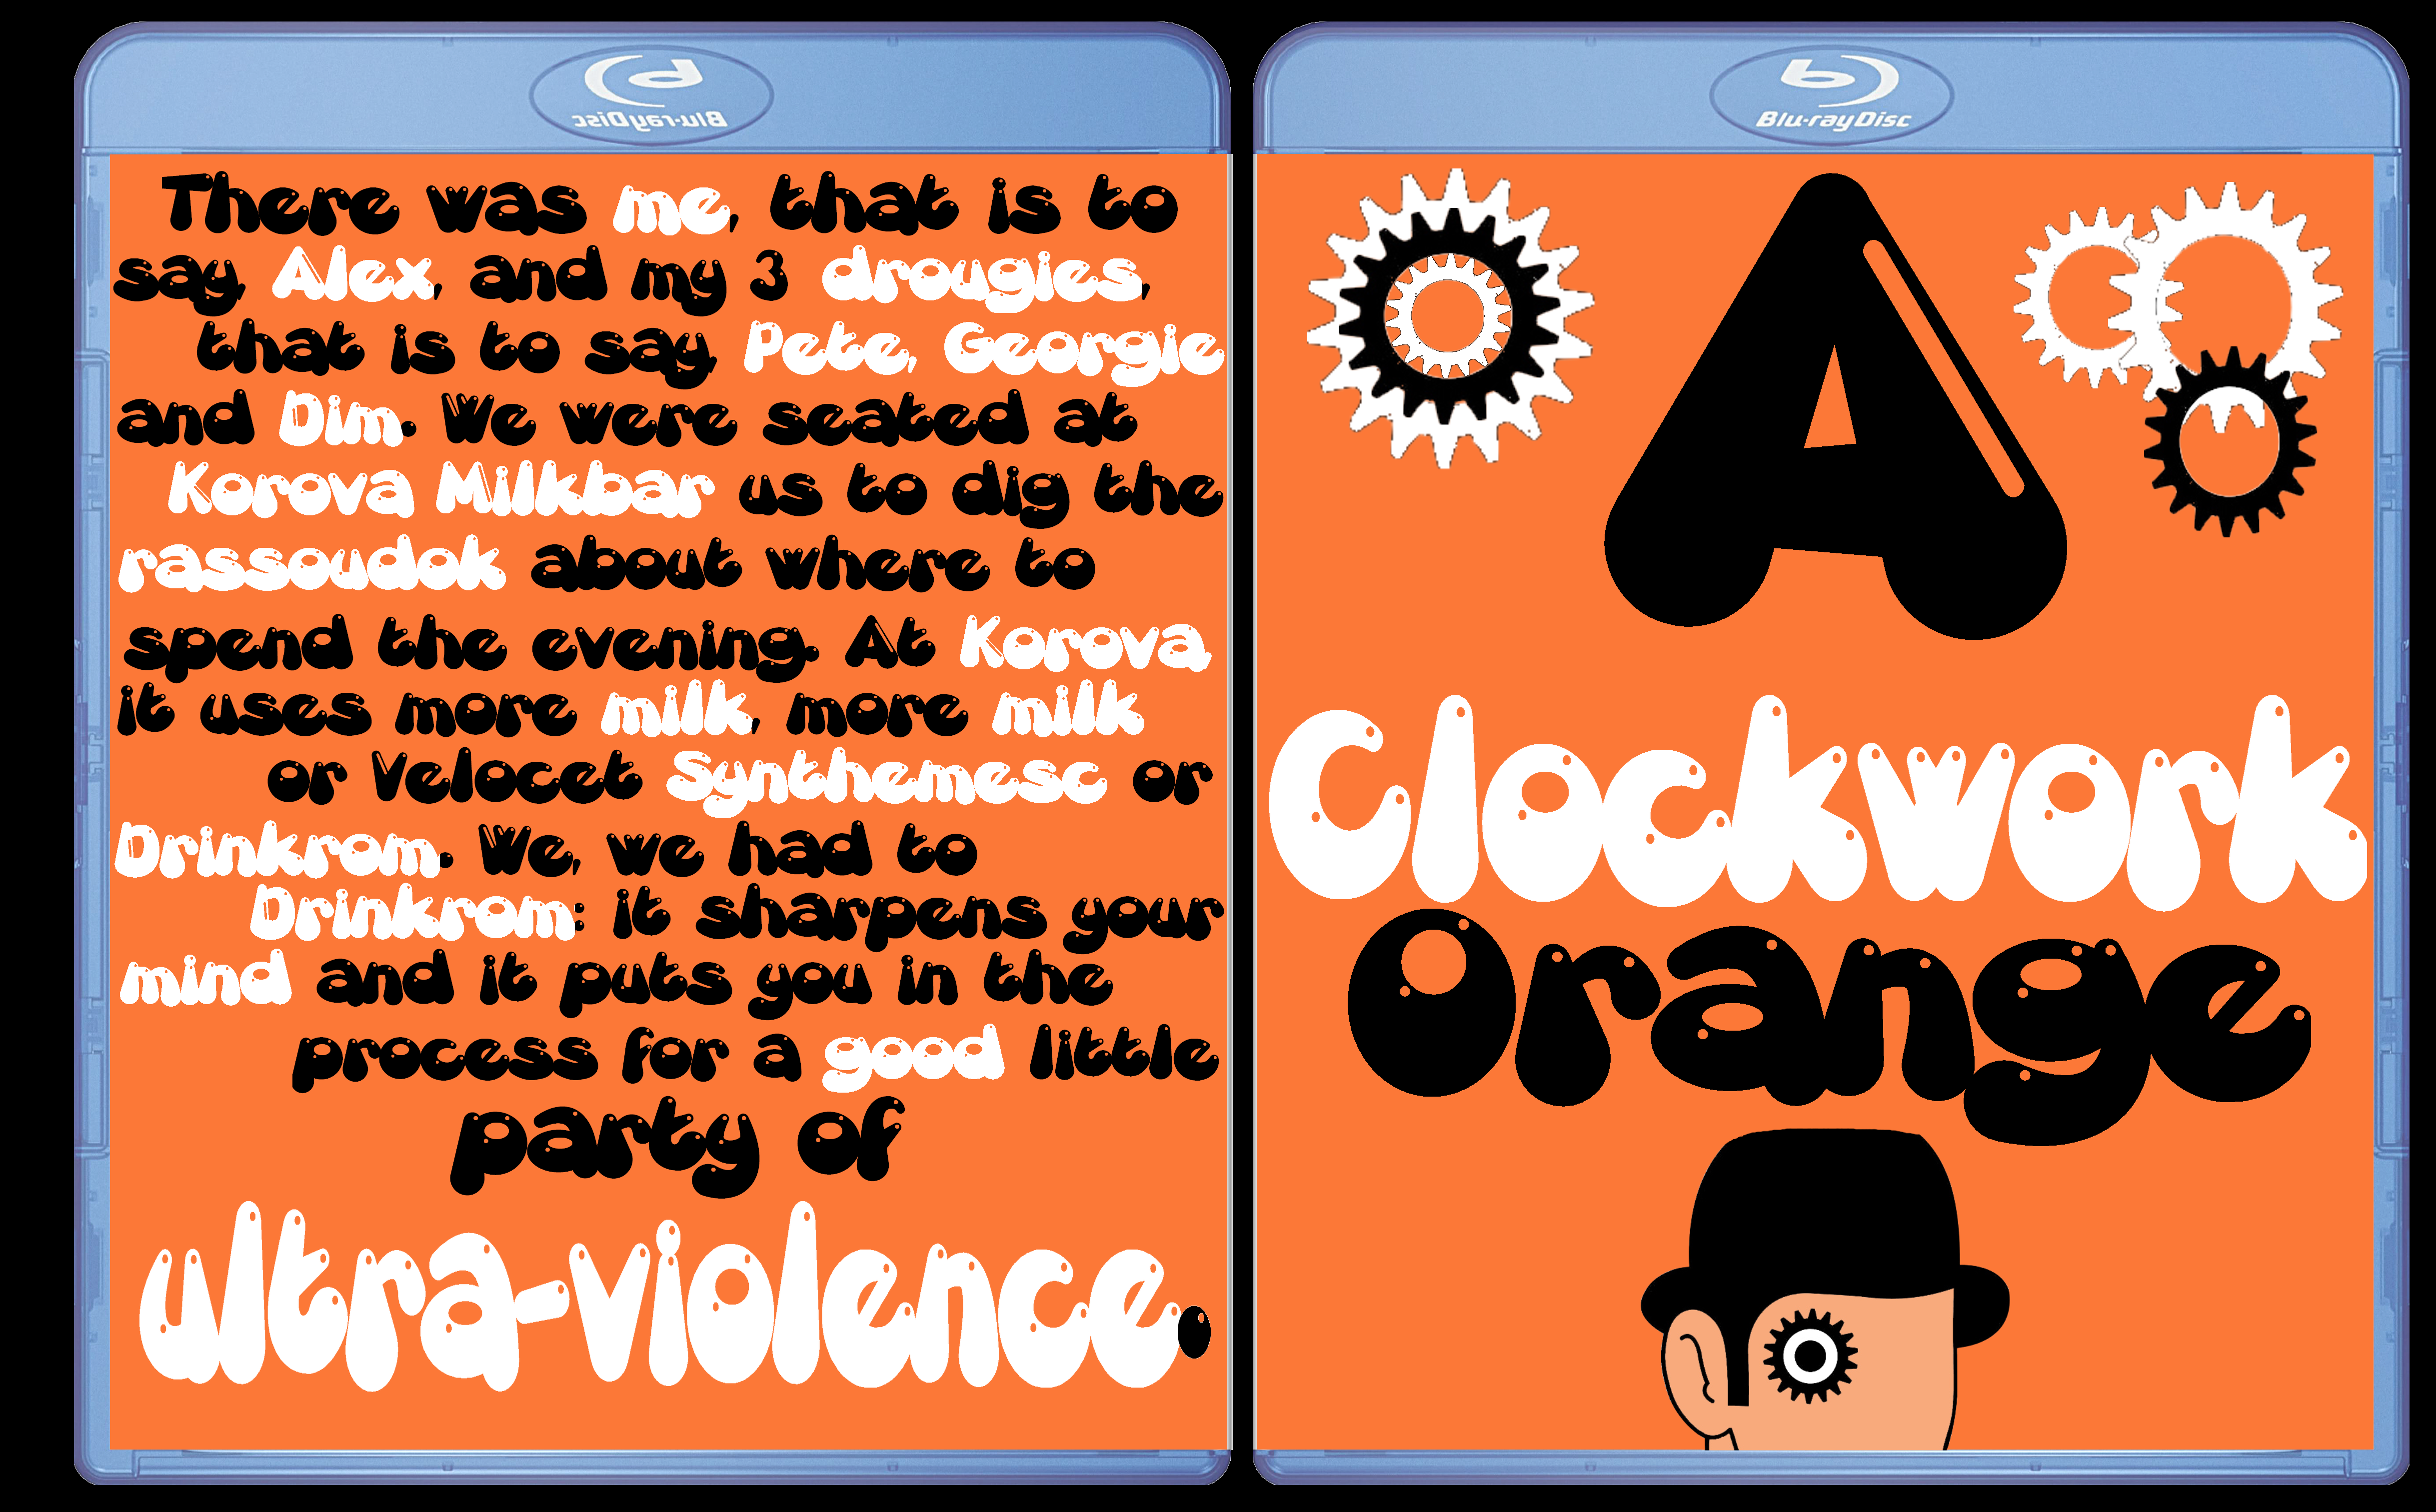 A Clockwork Orange box cover